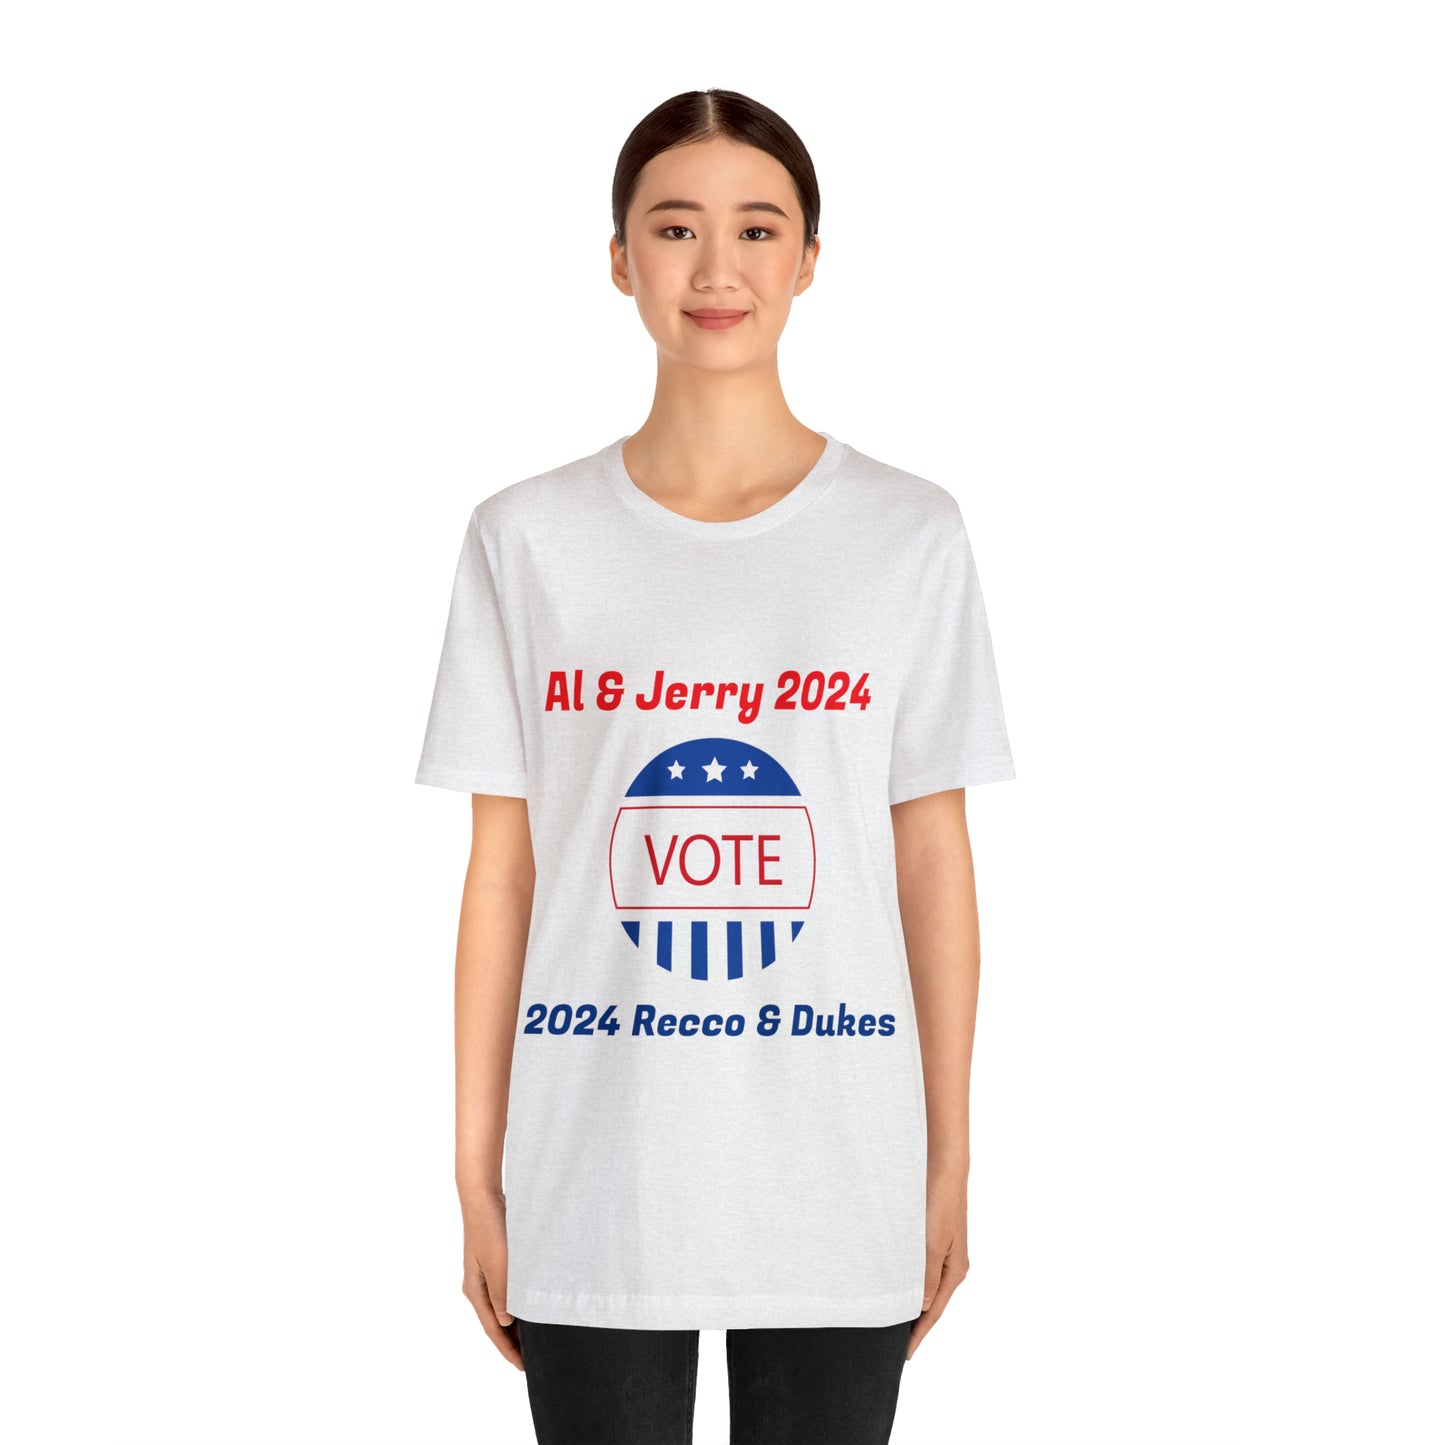 Al & Jerry "2024 Vote" Short Sleeve Tee